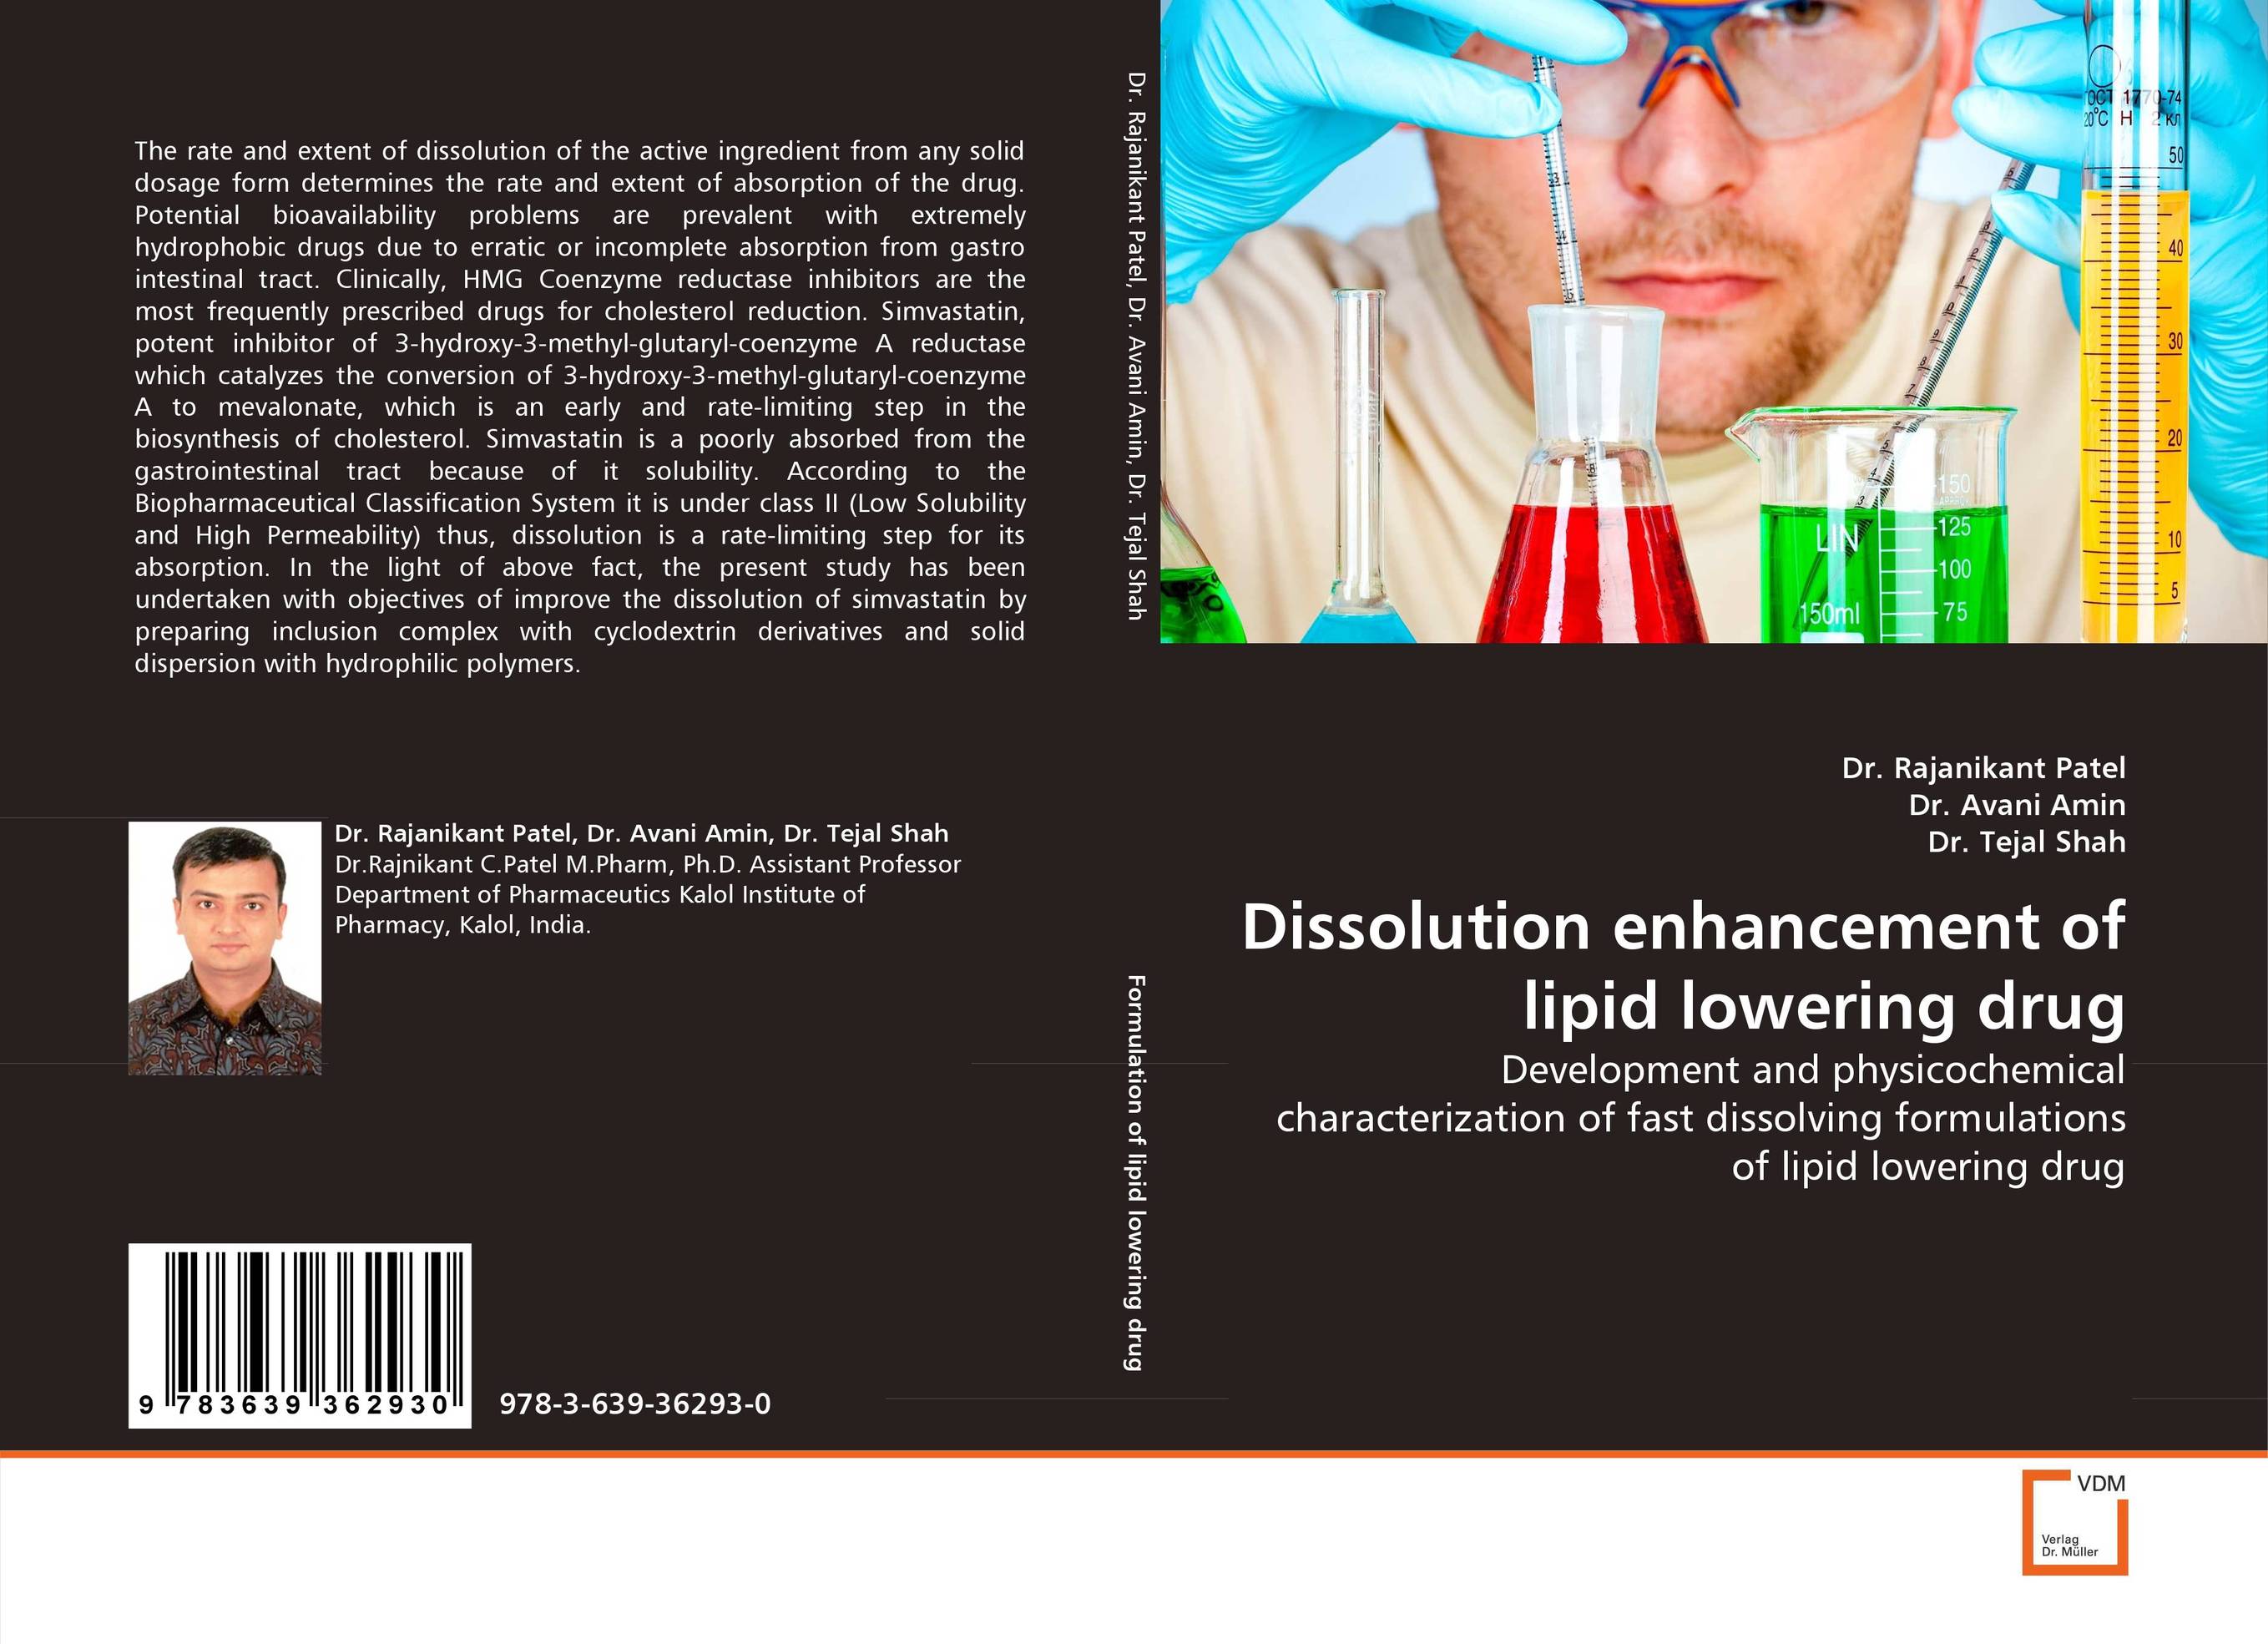 Dissolution enhancement of lipid lowering drug